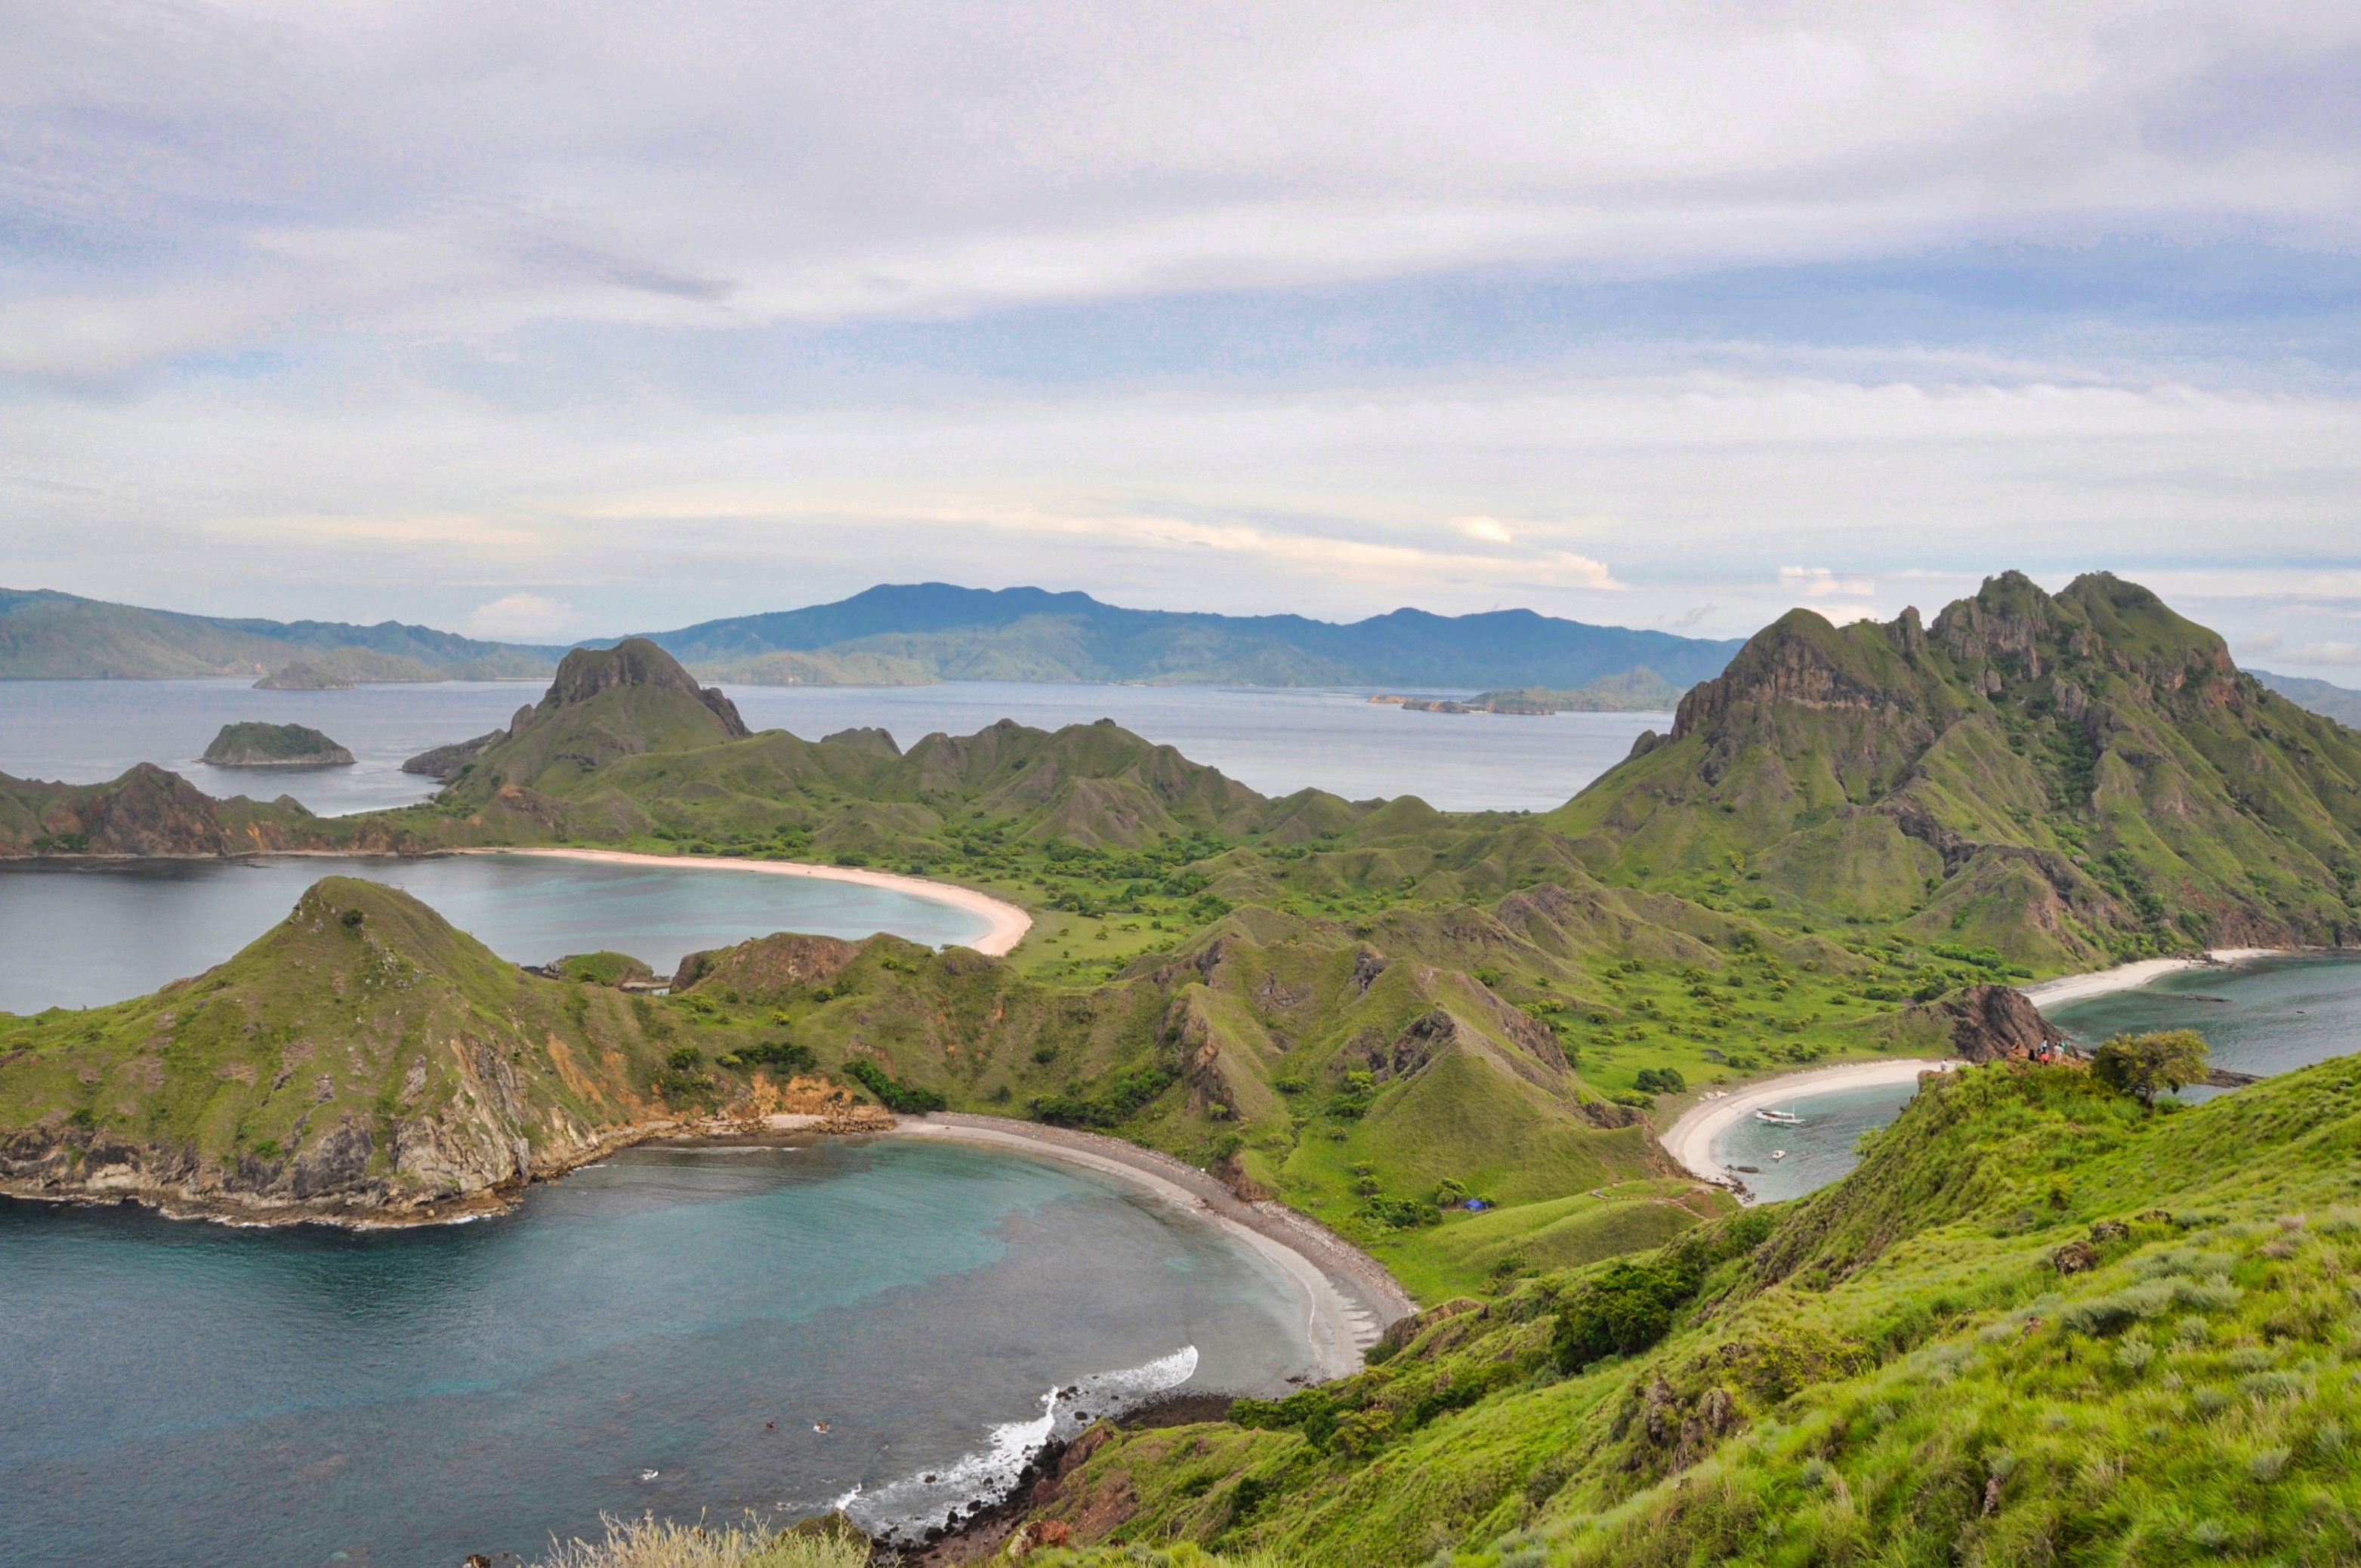 Two Travel The World - Manta Point Labuan Bajo